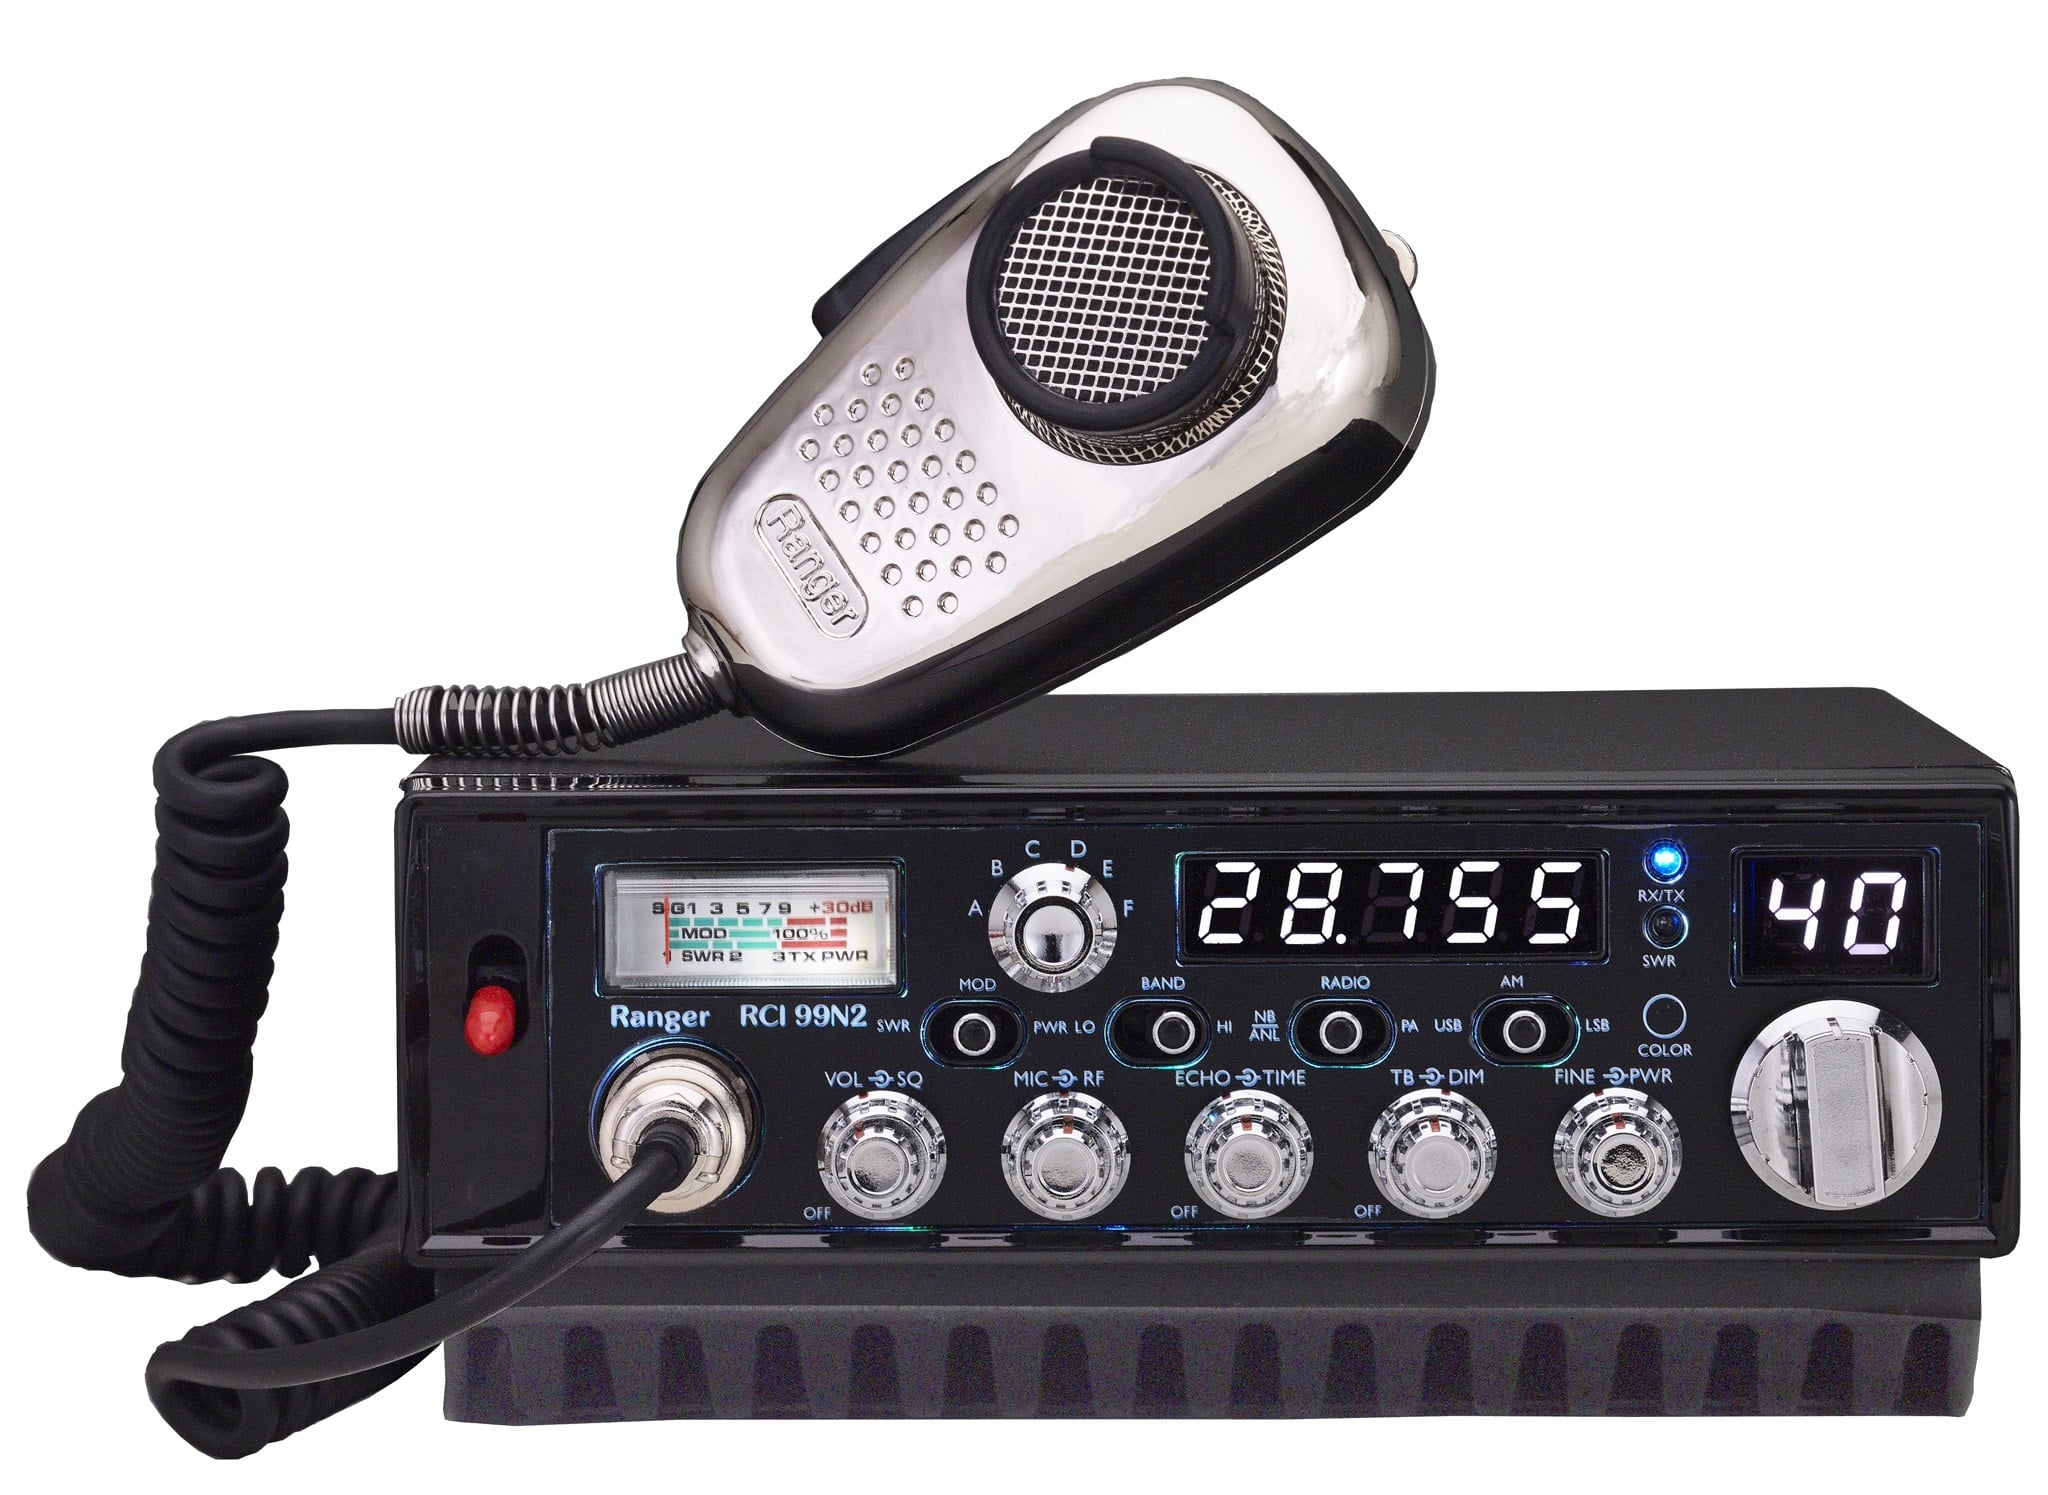 Ranger RCI-99N2 - 10 Meter Amateur Radio